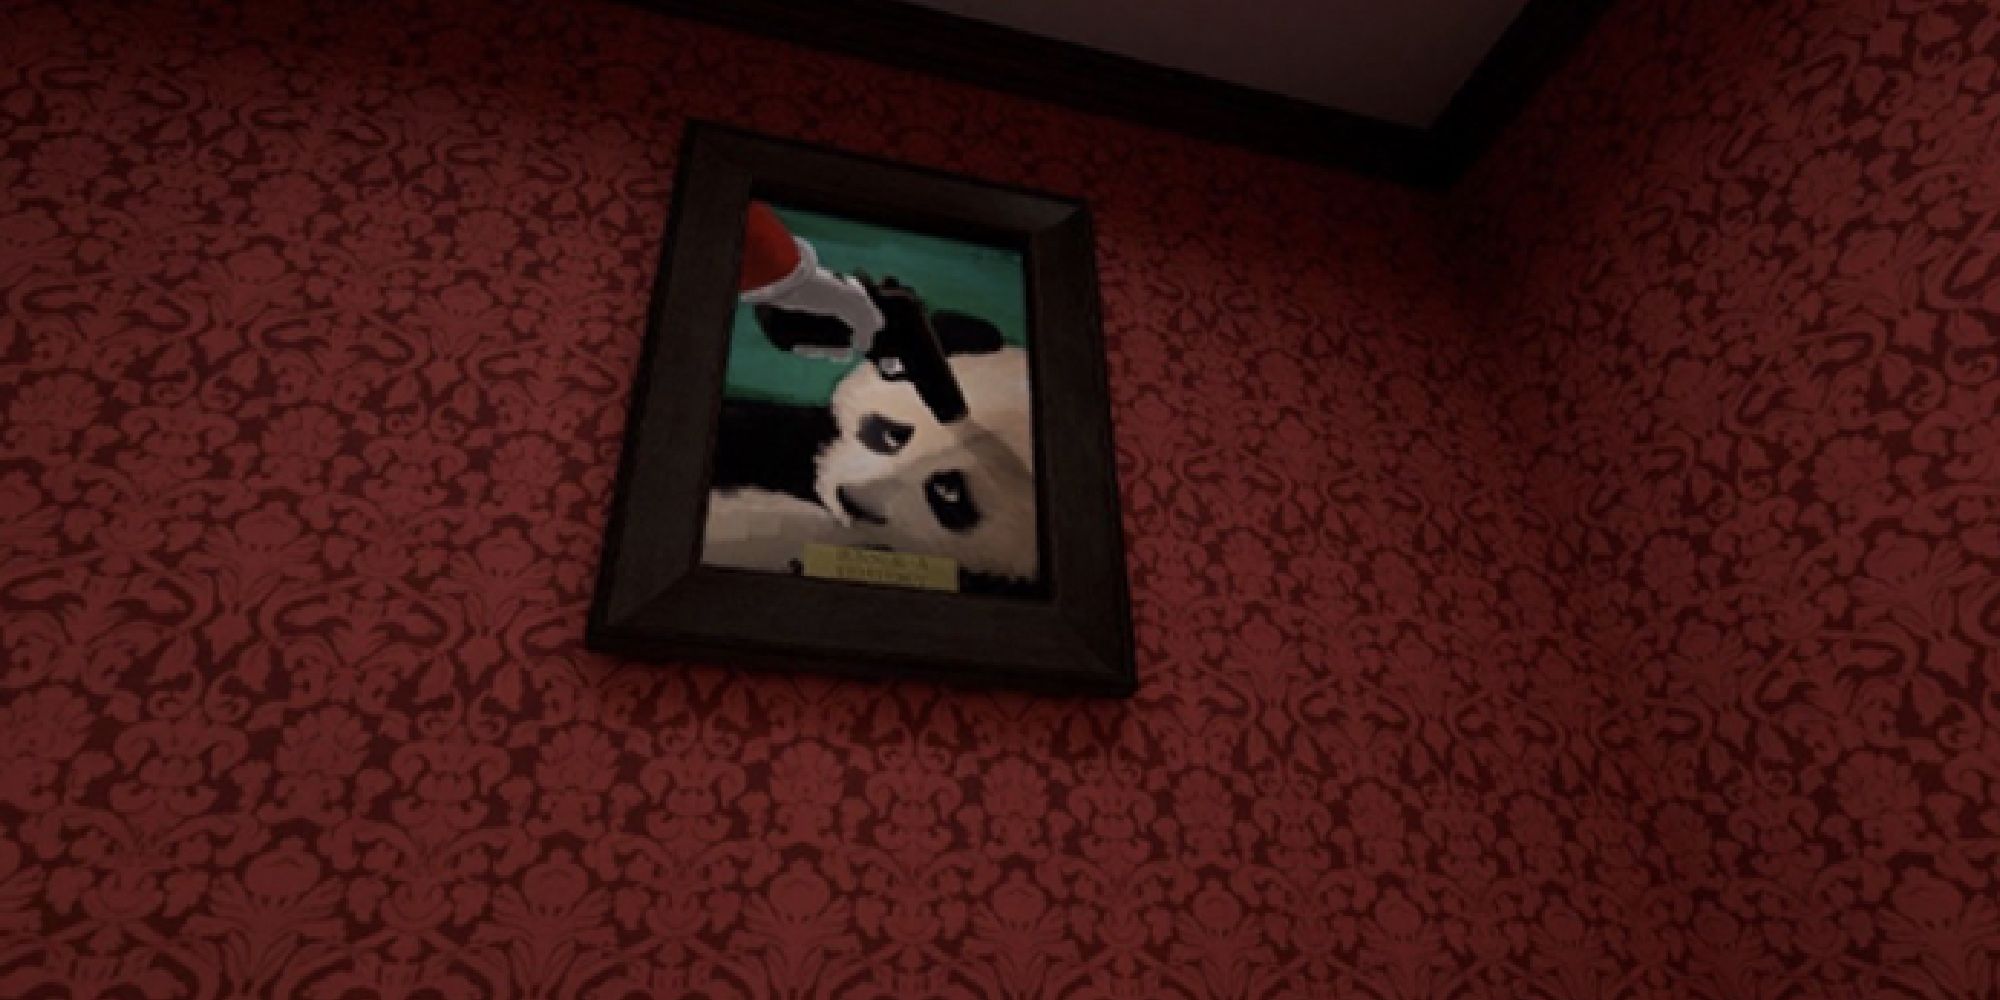 Stanley Parable panda painting